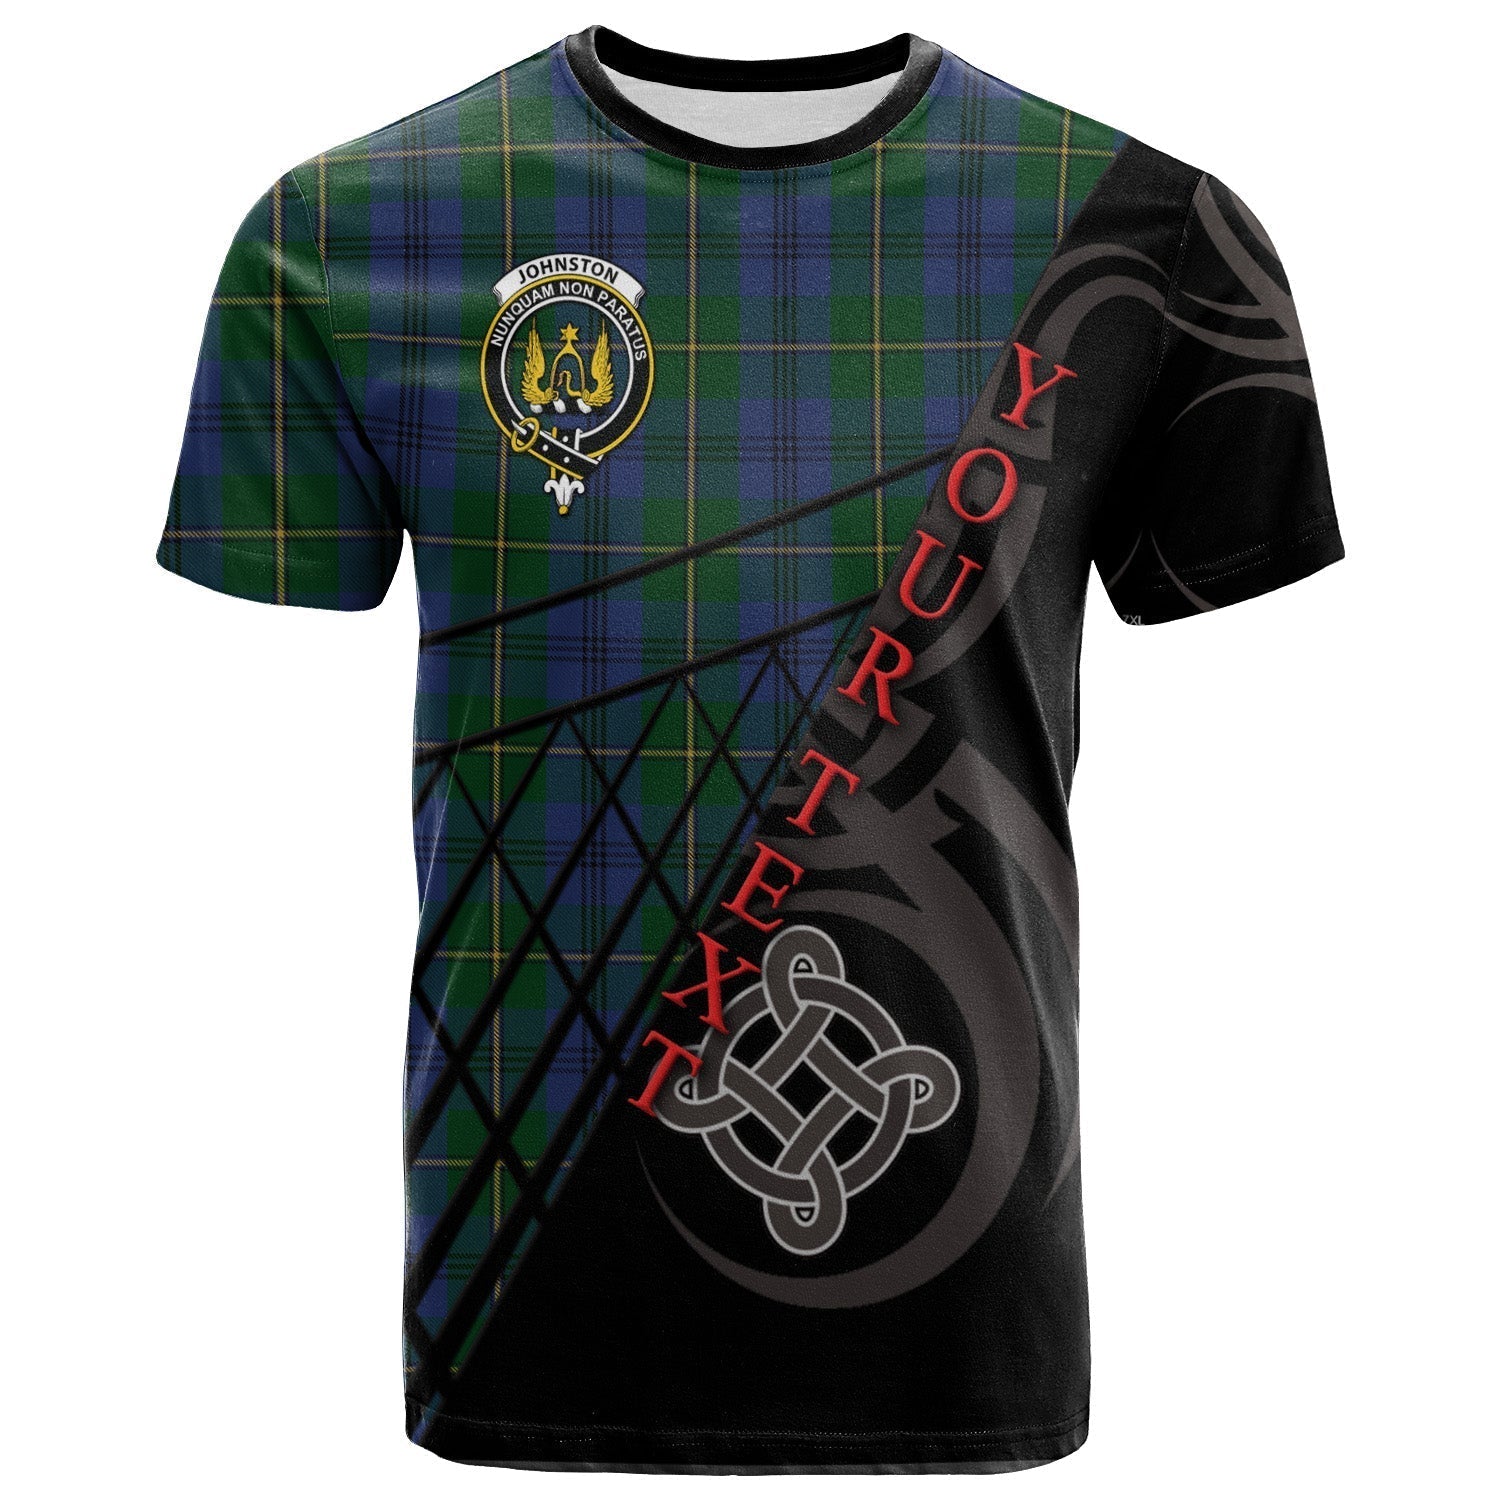 scottish-johnston-johnstone-02-clan-crest-tartan-pattern-celtic-t-shirt